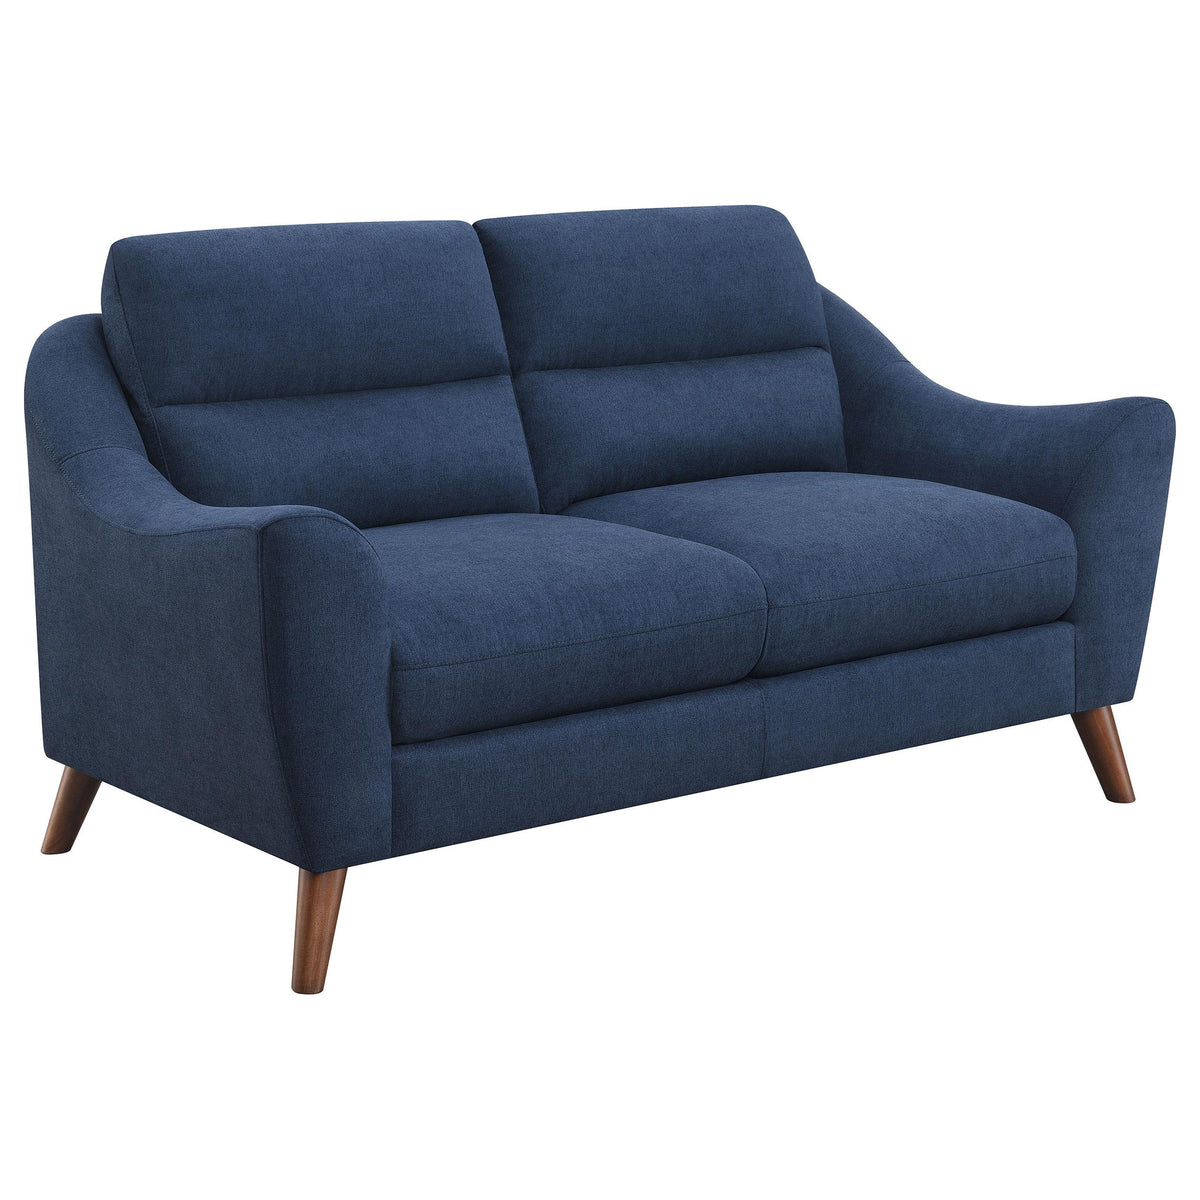 Gano Sloped Arm Upholstered Loveseat Navy Blue Gano Sloped Arm Upholstered Loveseat Navy Blue Half Price Furniture